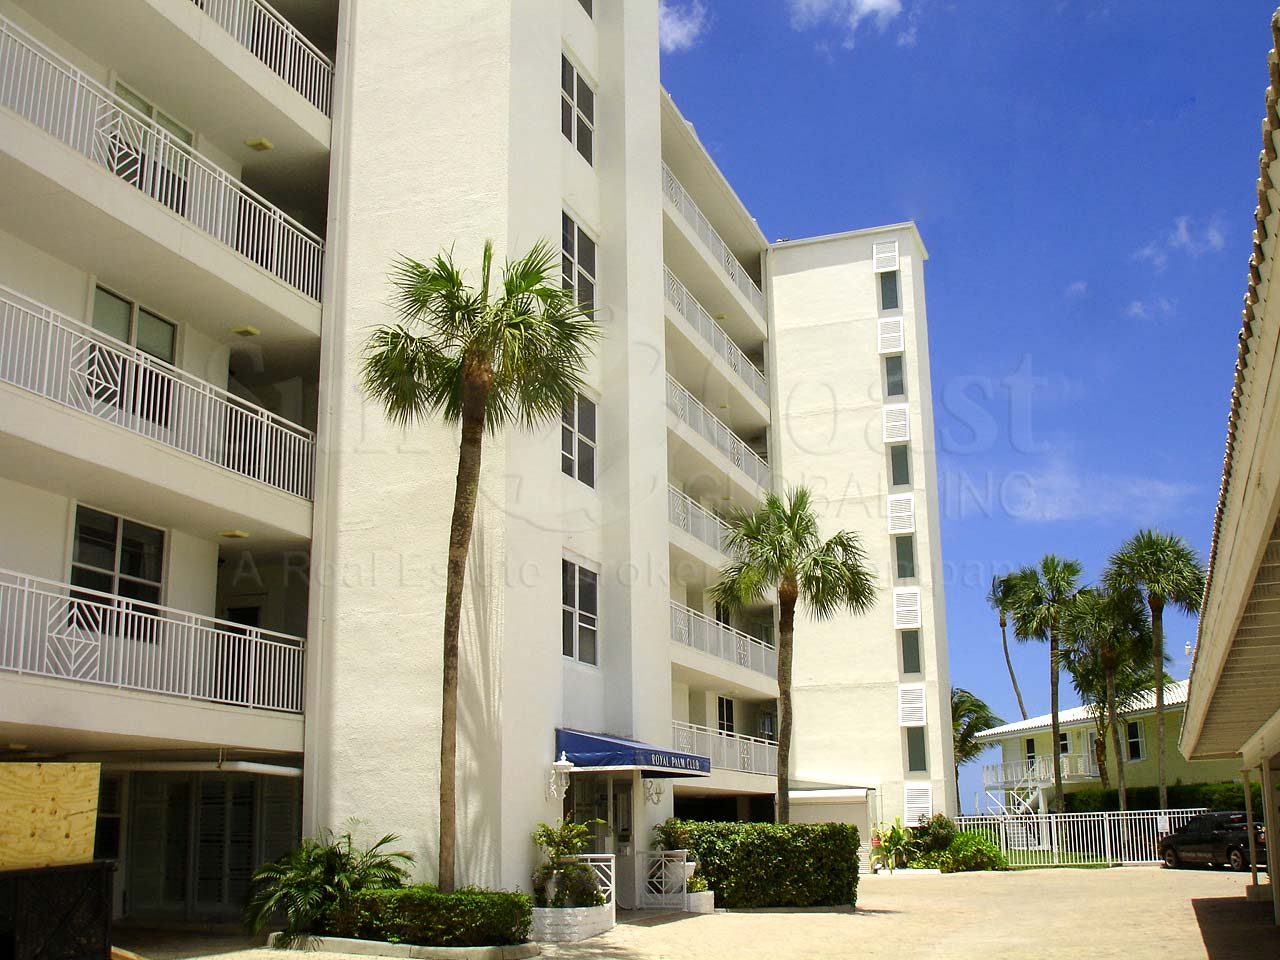 Royal Palm Club Condominium Building